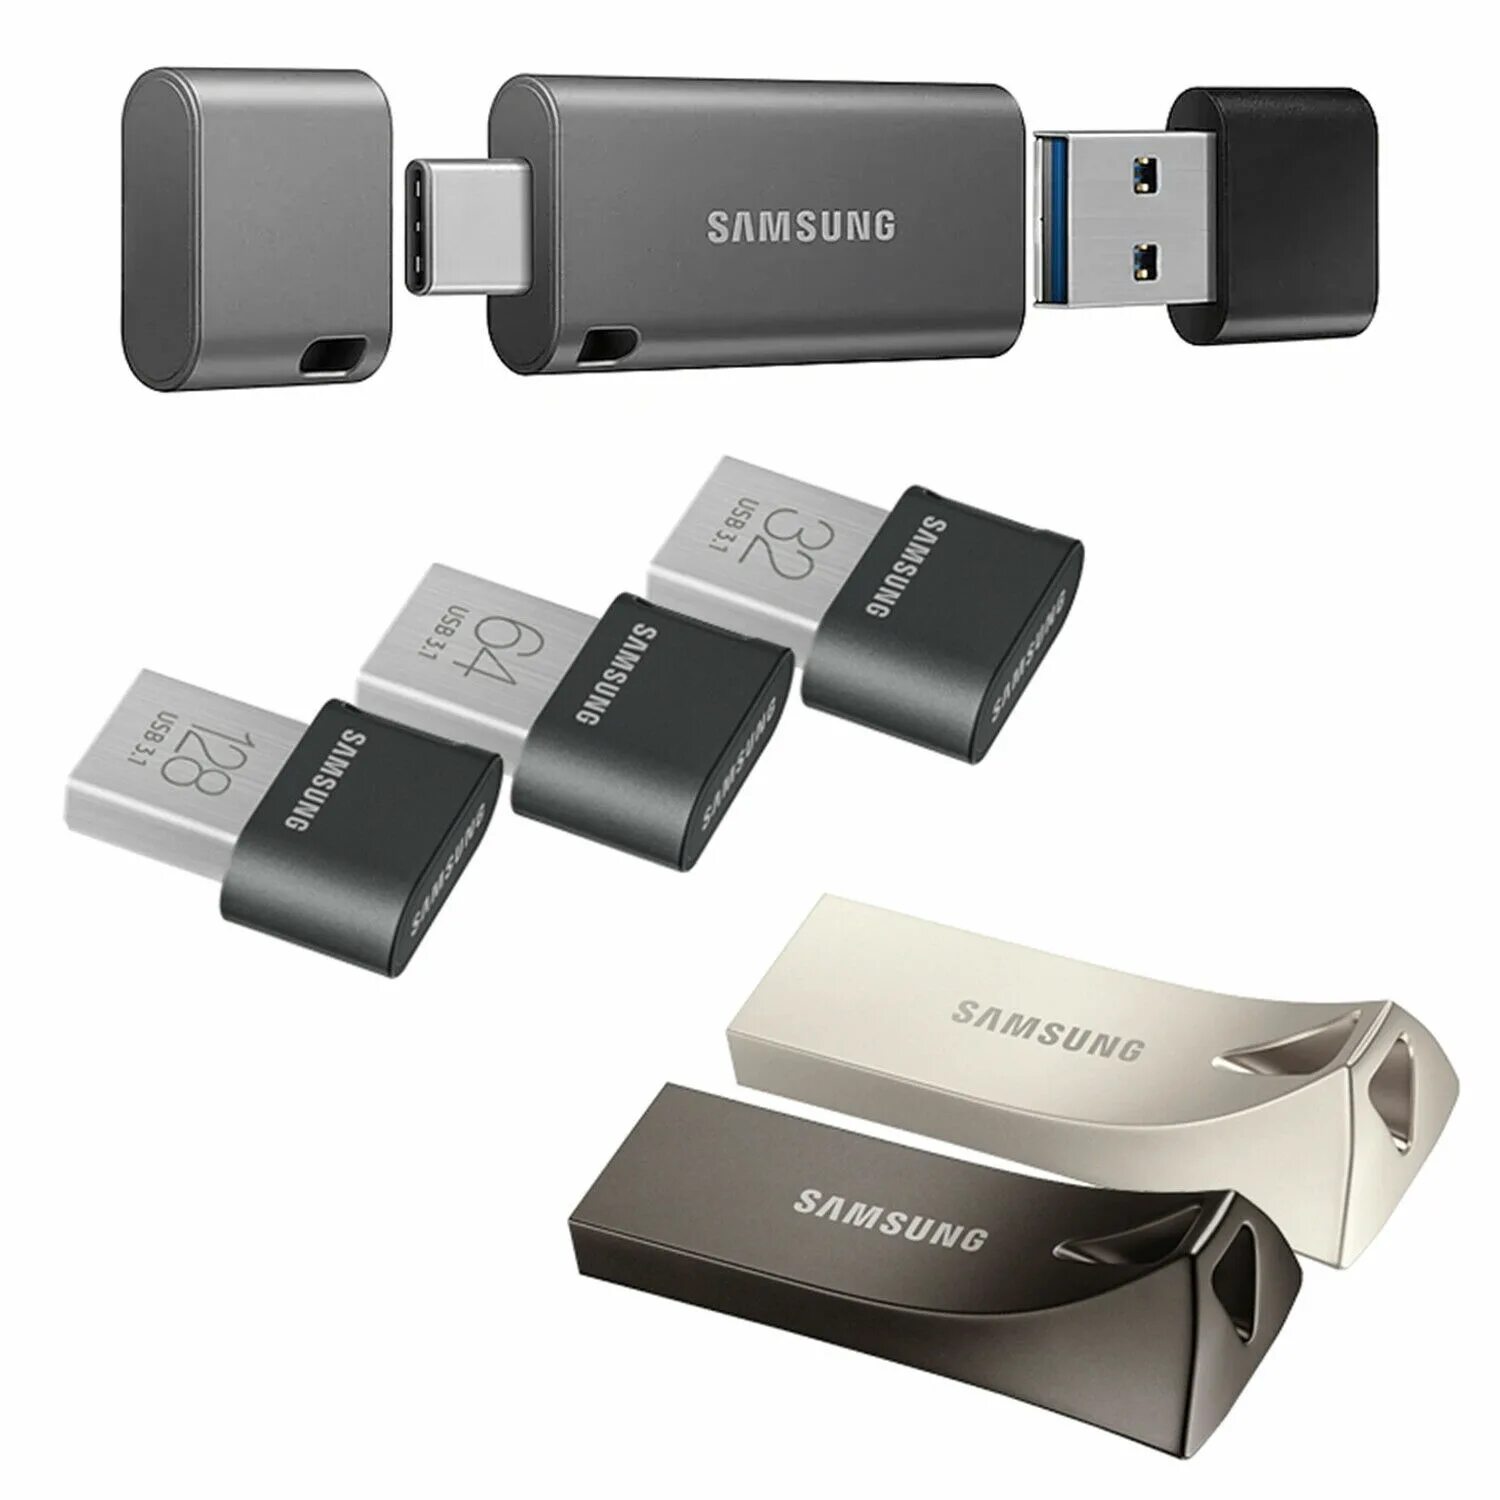 Флешка samsung телефон. Samsung USB 3.1 Flash Drive Duo Plus. Samsung USB 3.1 Flash Drive Fit Plus. Флешка Samsung USB 3.1 Flash Drive Fit Plus 128gb. Samsung Duo Plus USB 3.1 64gb.